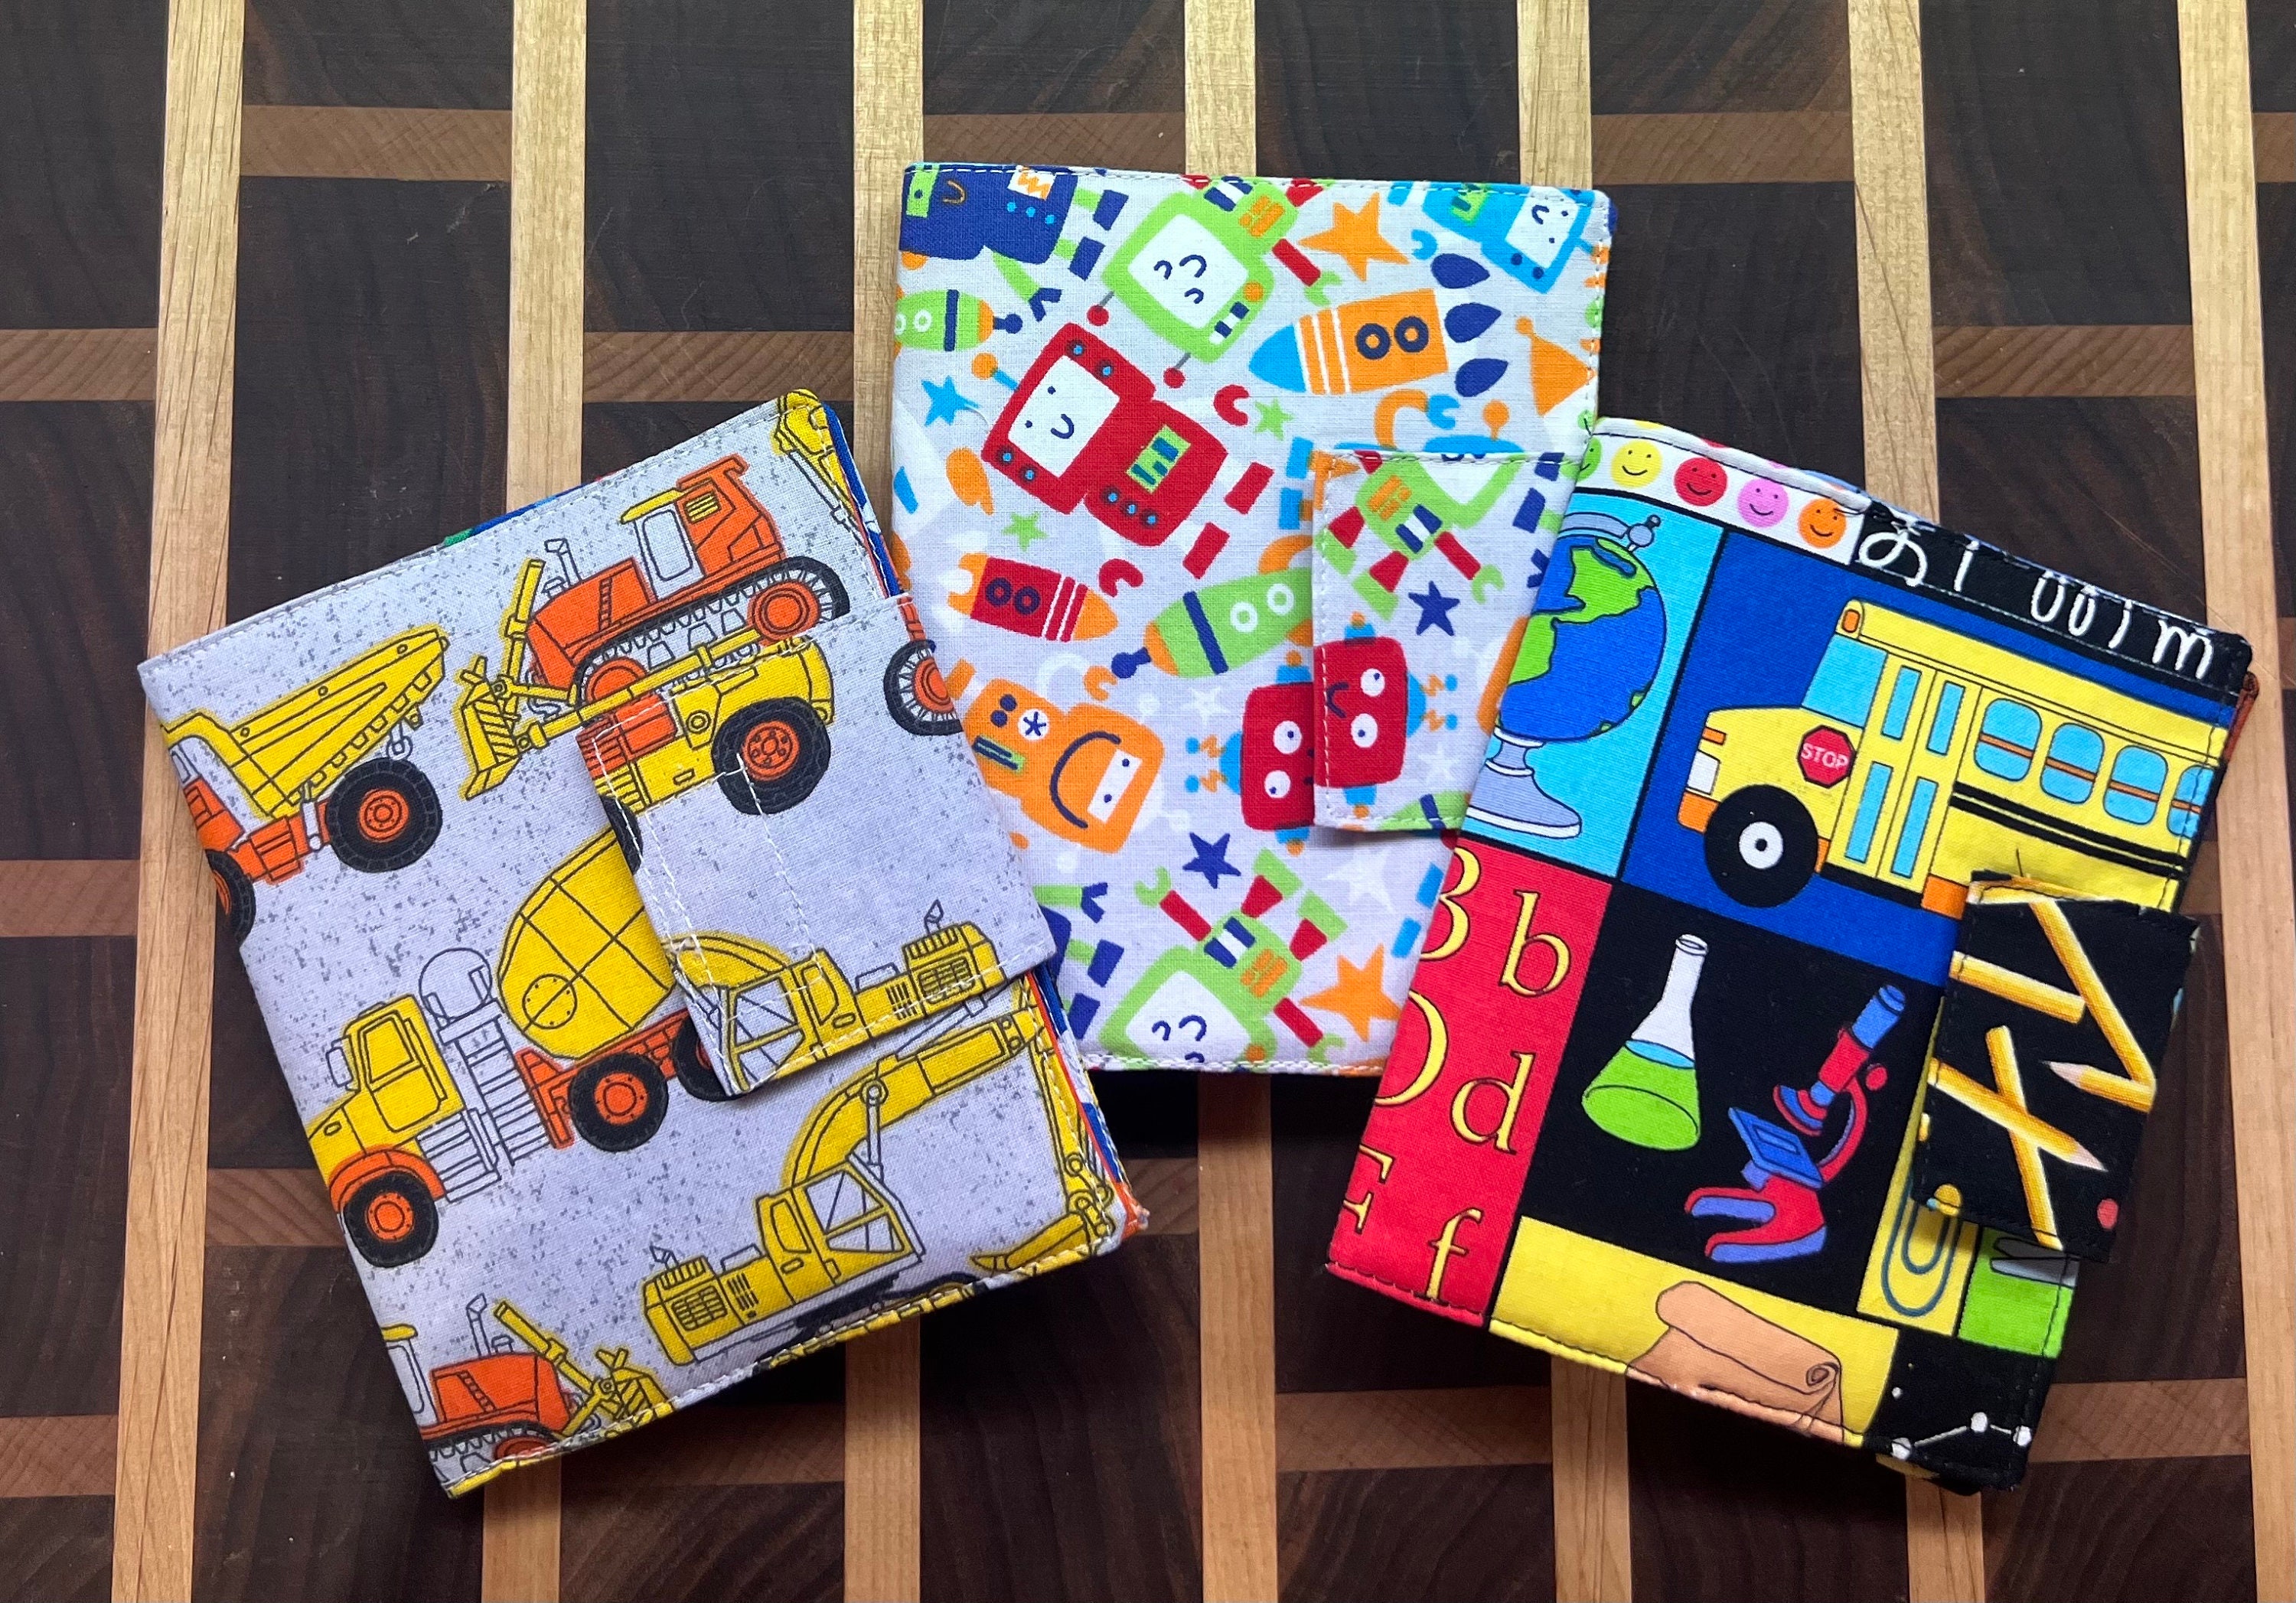 Travel Art Kit for Kids - Construction Trucks Travel Drawing Wallet, Art Kit, Crayon Roll Up, Birthday Gift for Kids, Kids Activity Kit